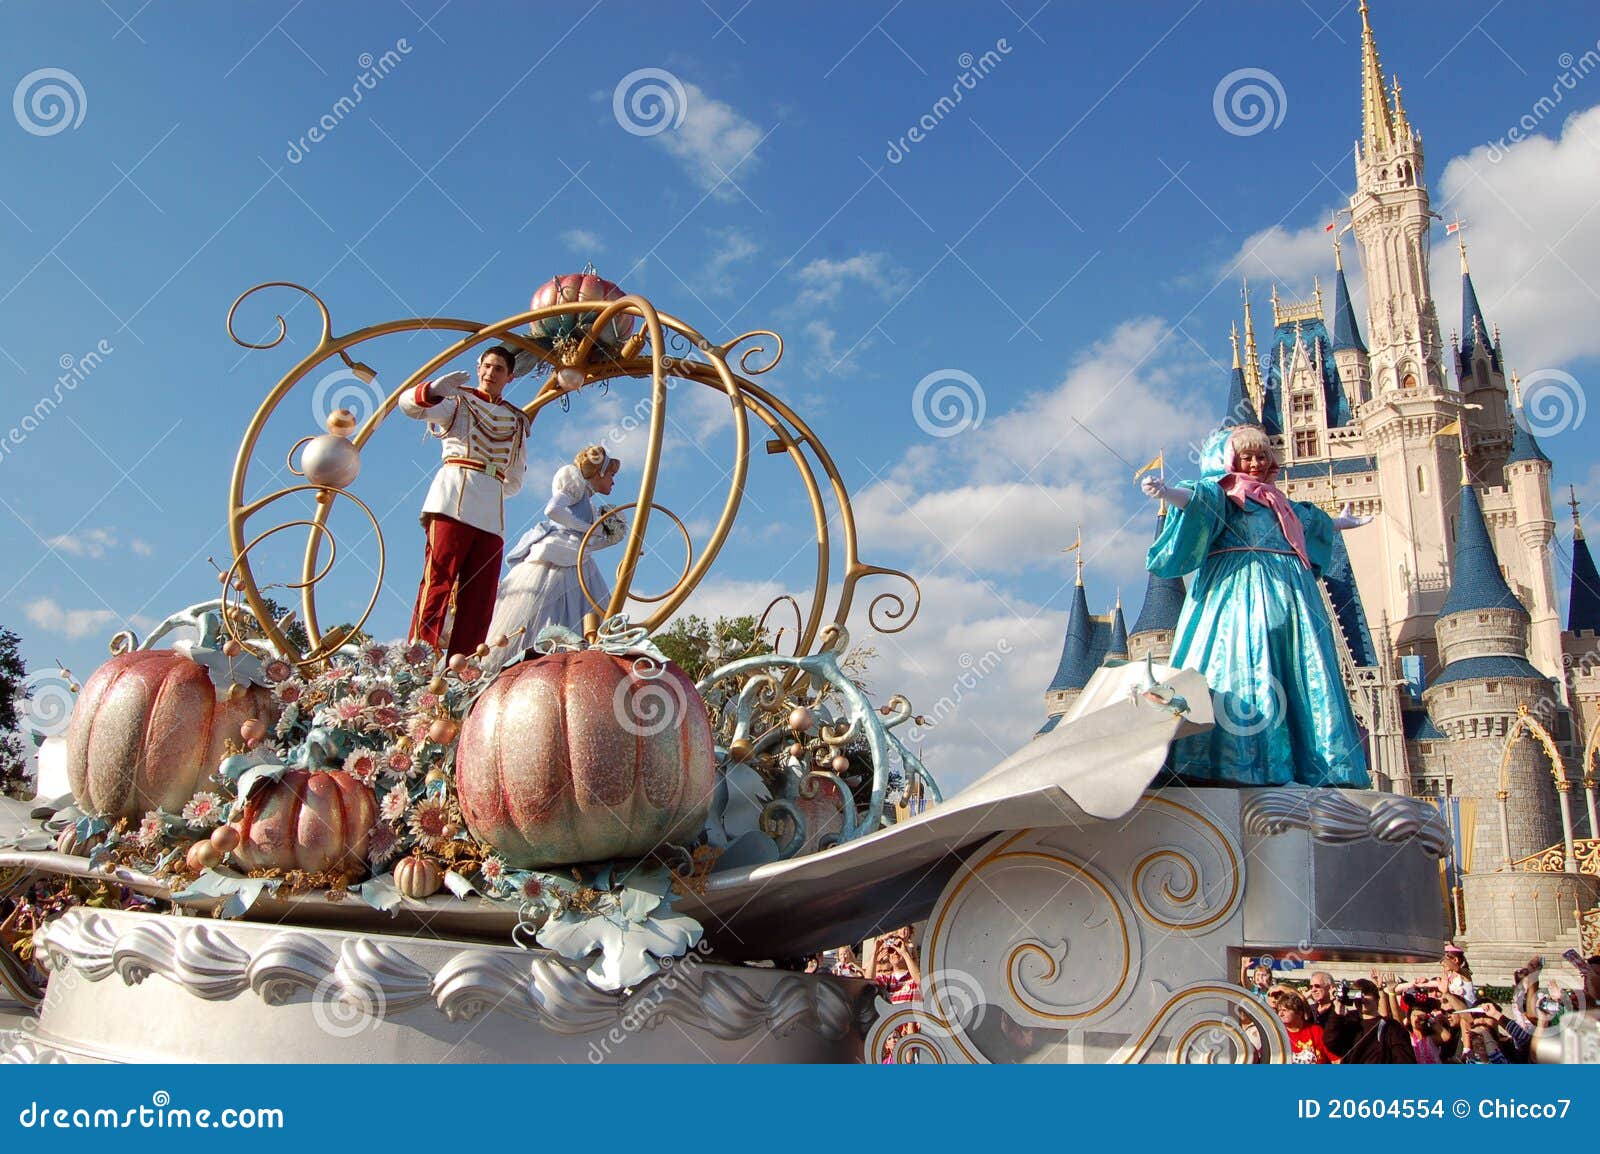 Disney Cinderella and Prince during a Parade Editorial Stock Image ...